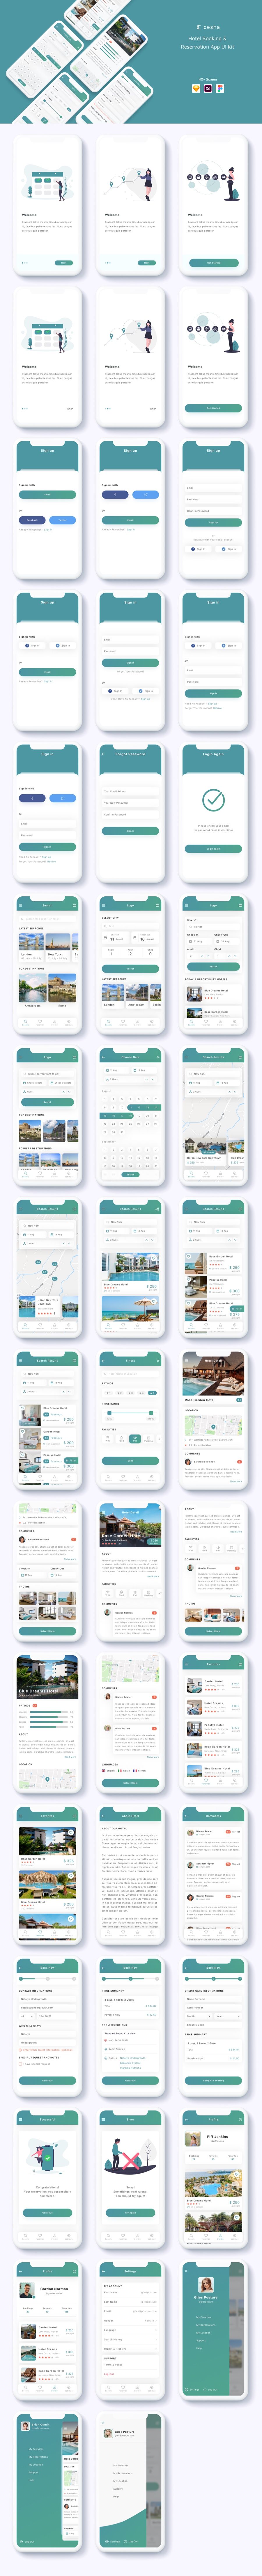 Cesha - Hotel Booking & Reservation App UI Kit - 2